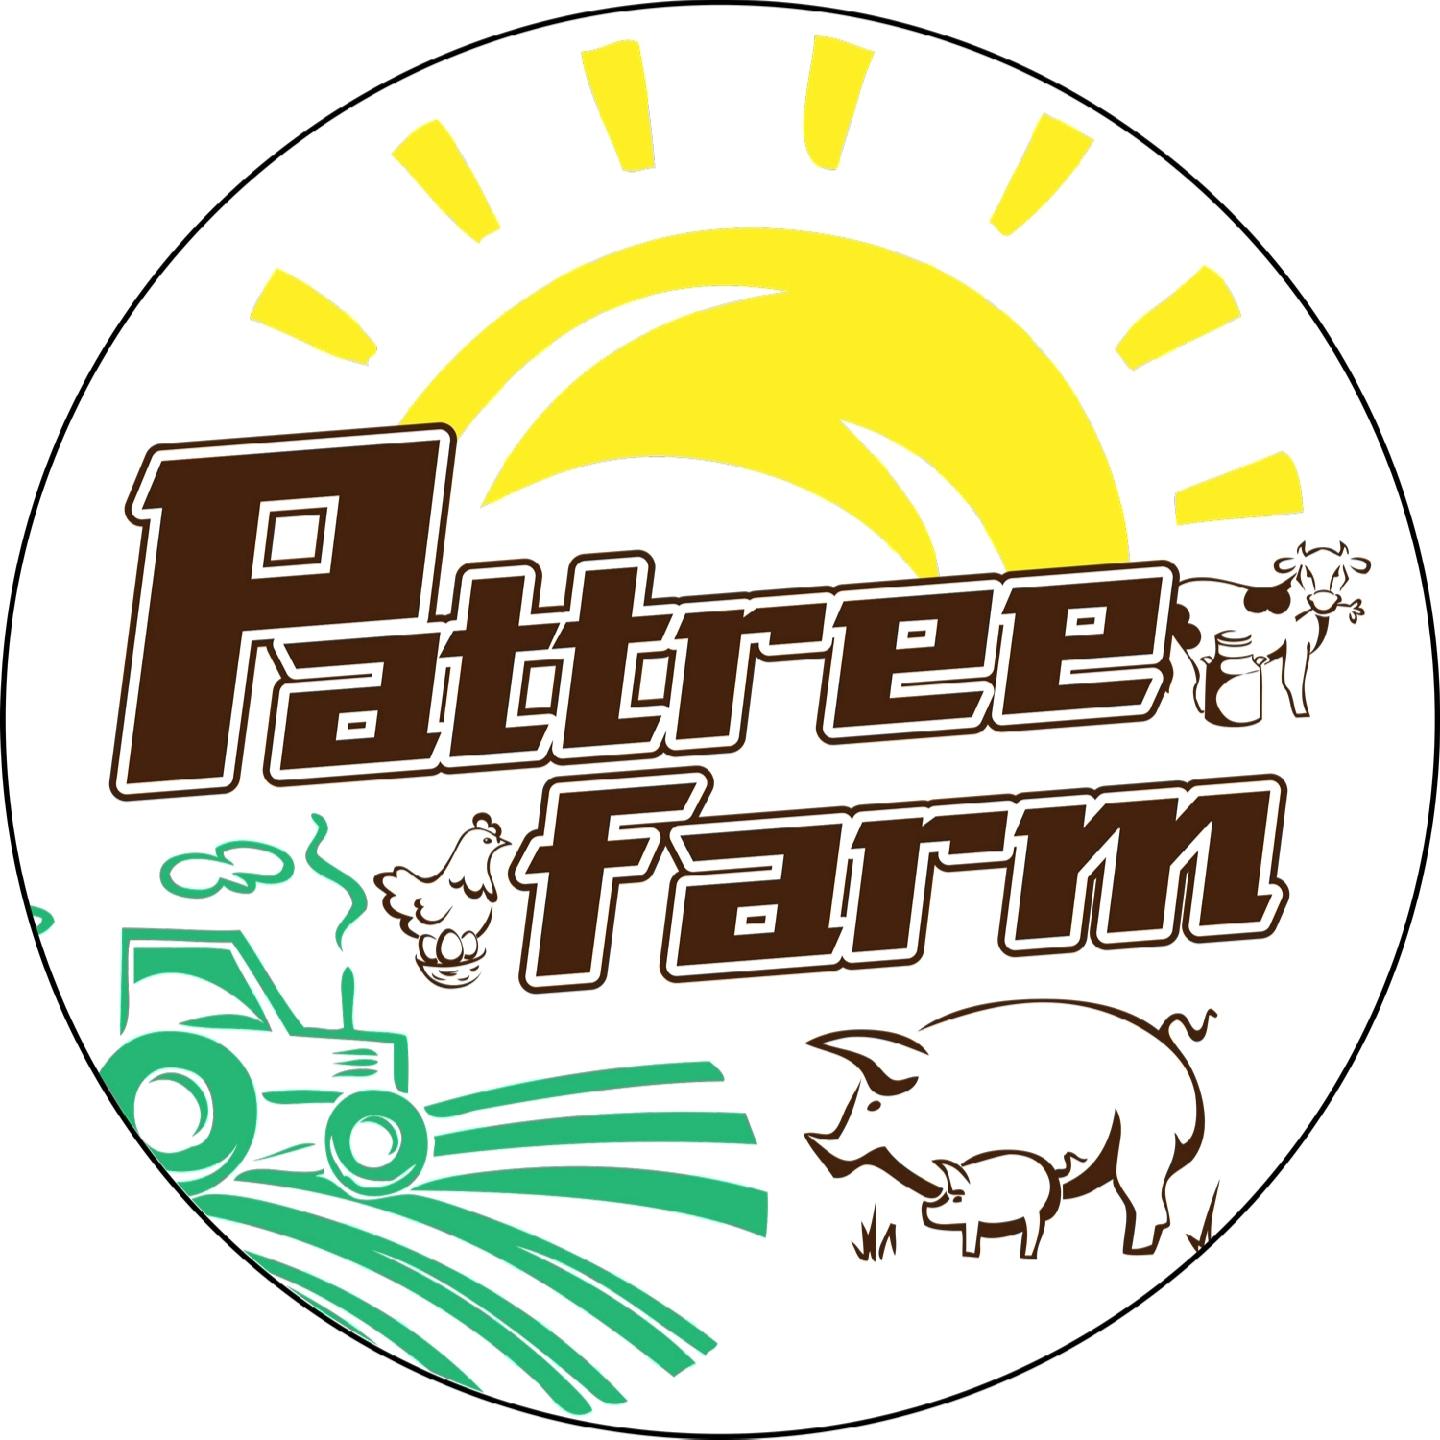 Gambar Pattree Farm